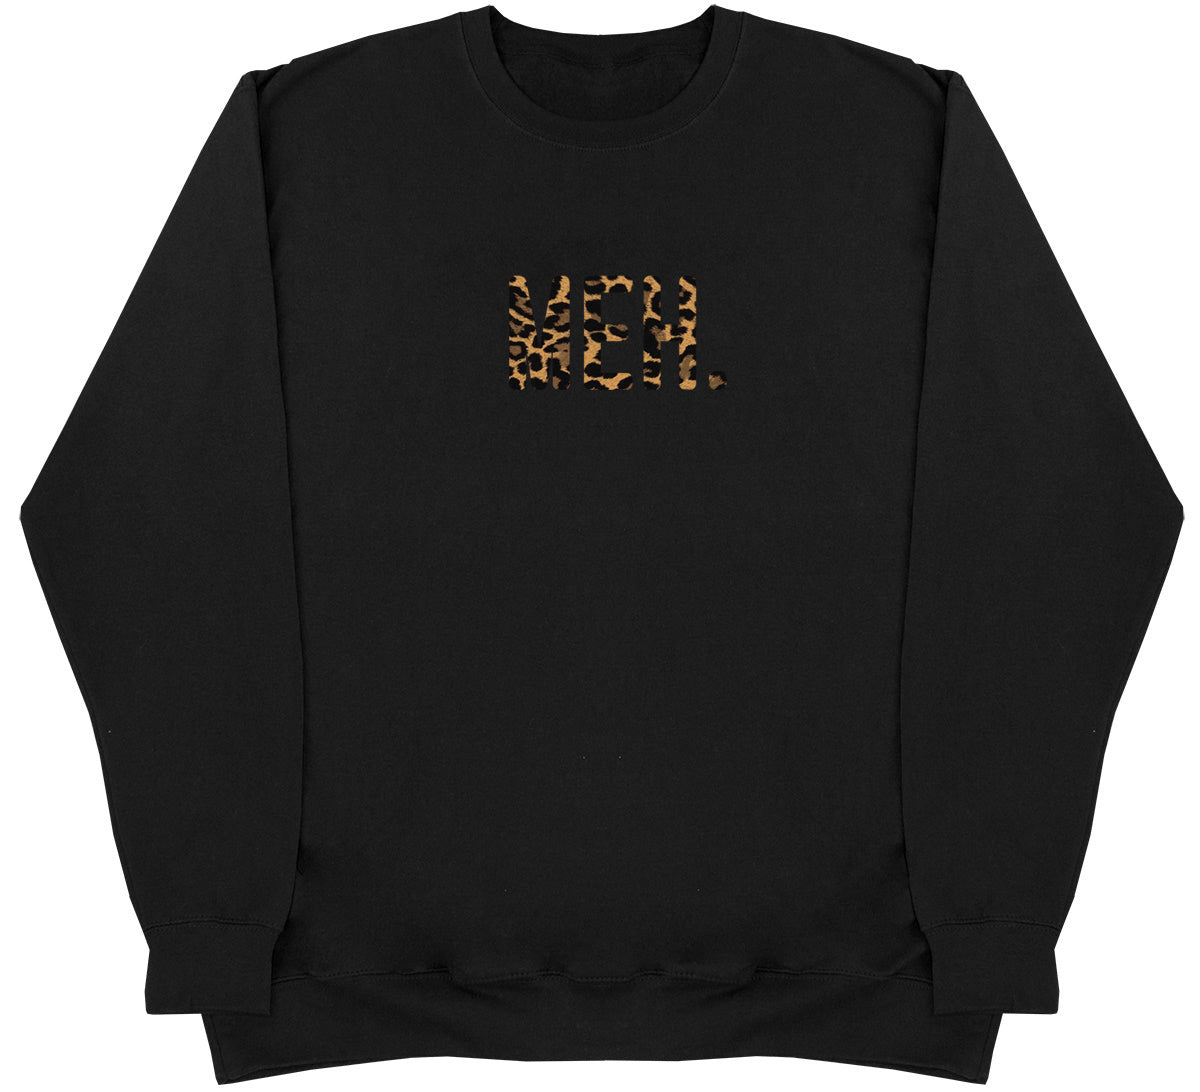 MEH. - Leopard Print - Huge Oversized Comfy Original Sweater